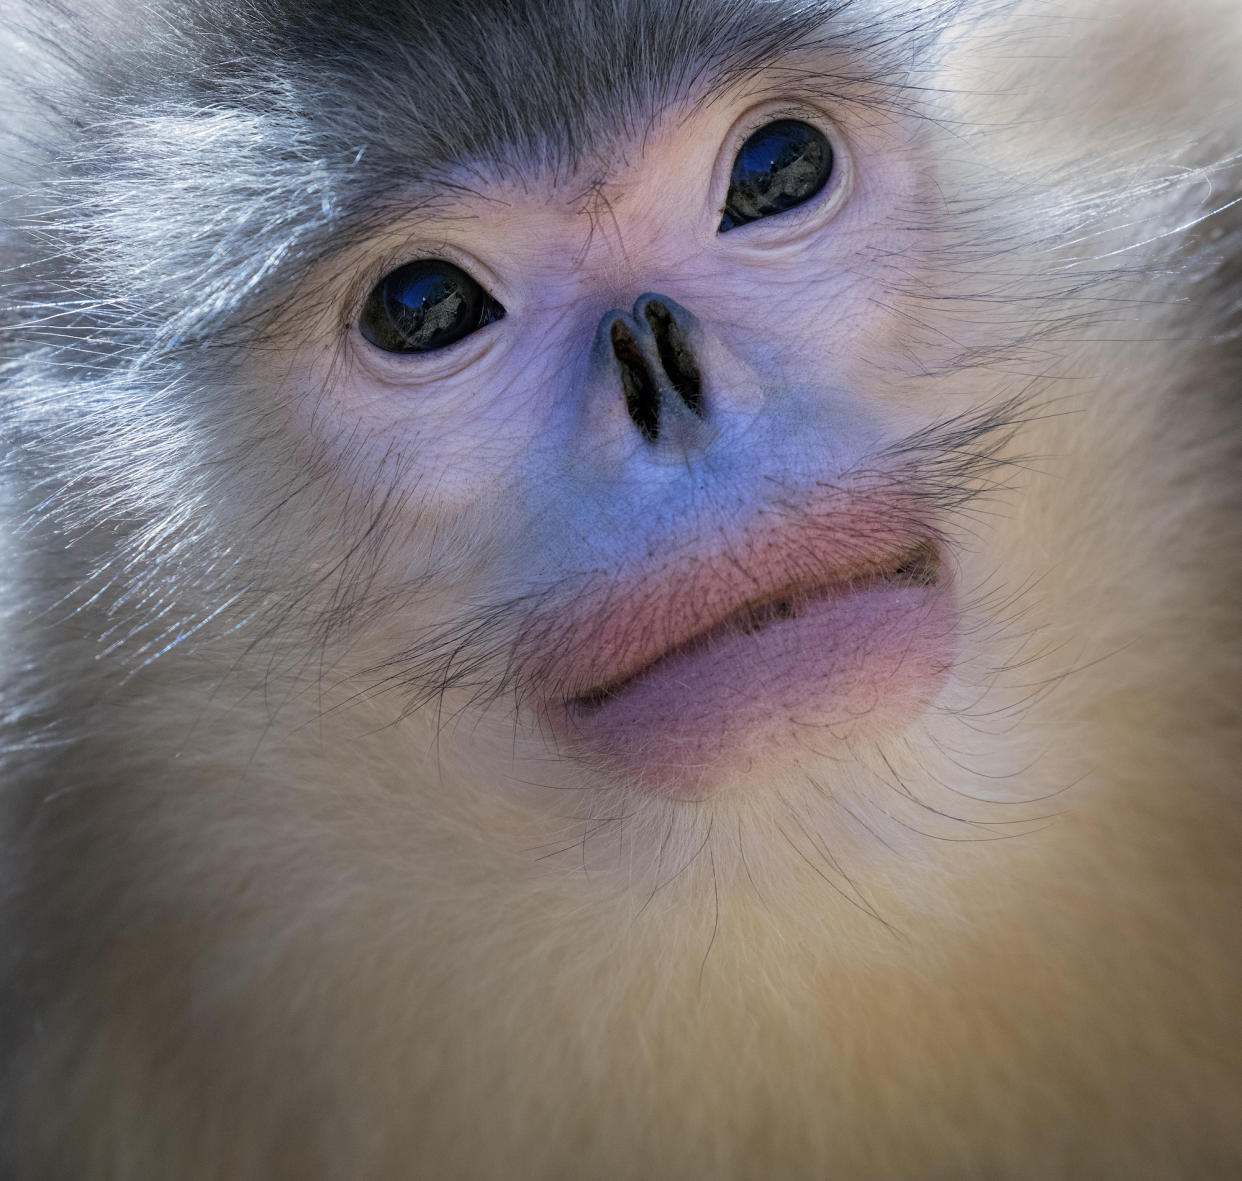 https://www.gettyimages.co.uk/detail/photo/adult-black-snub-nosed-monkey-portrait-royalty-free-image/659071372?phrase=Snub-nosed%2Bmonkey